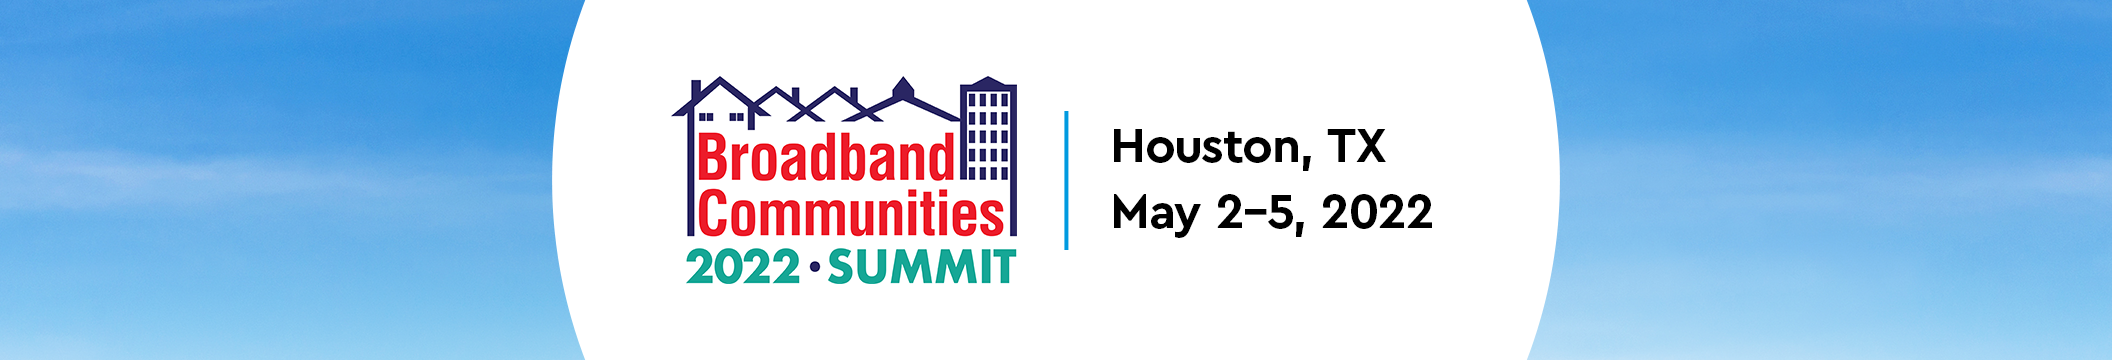 Broadband Communities 2022 | Summit Houston, TX |  May 2-5, 2022